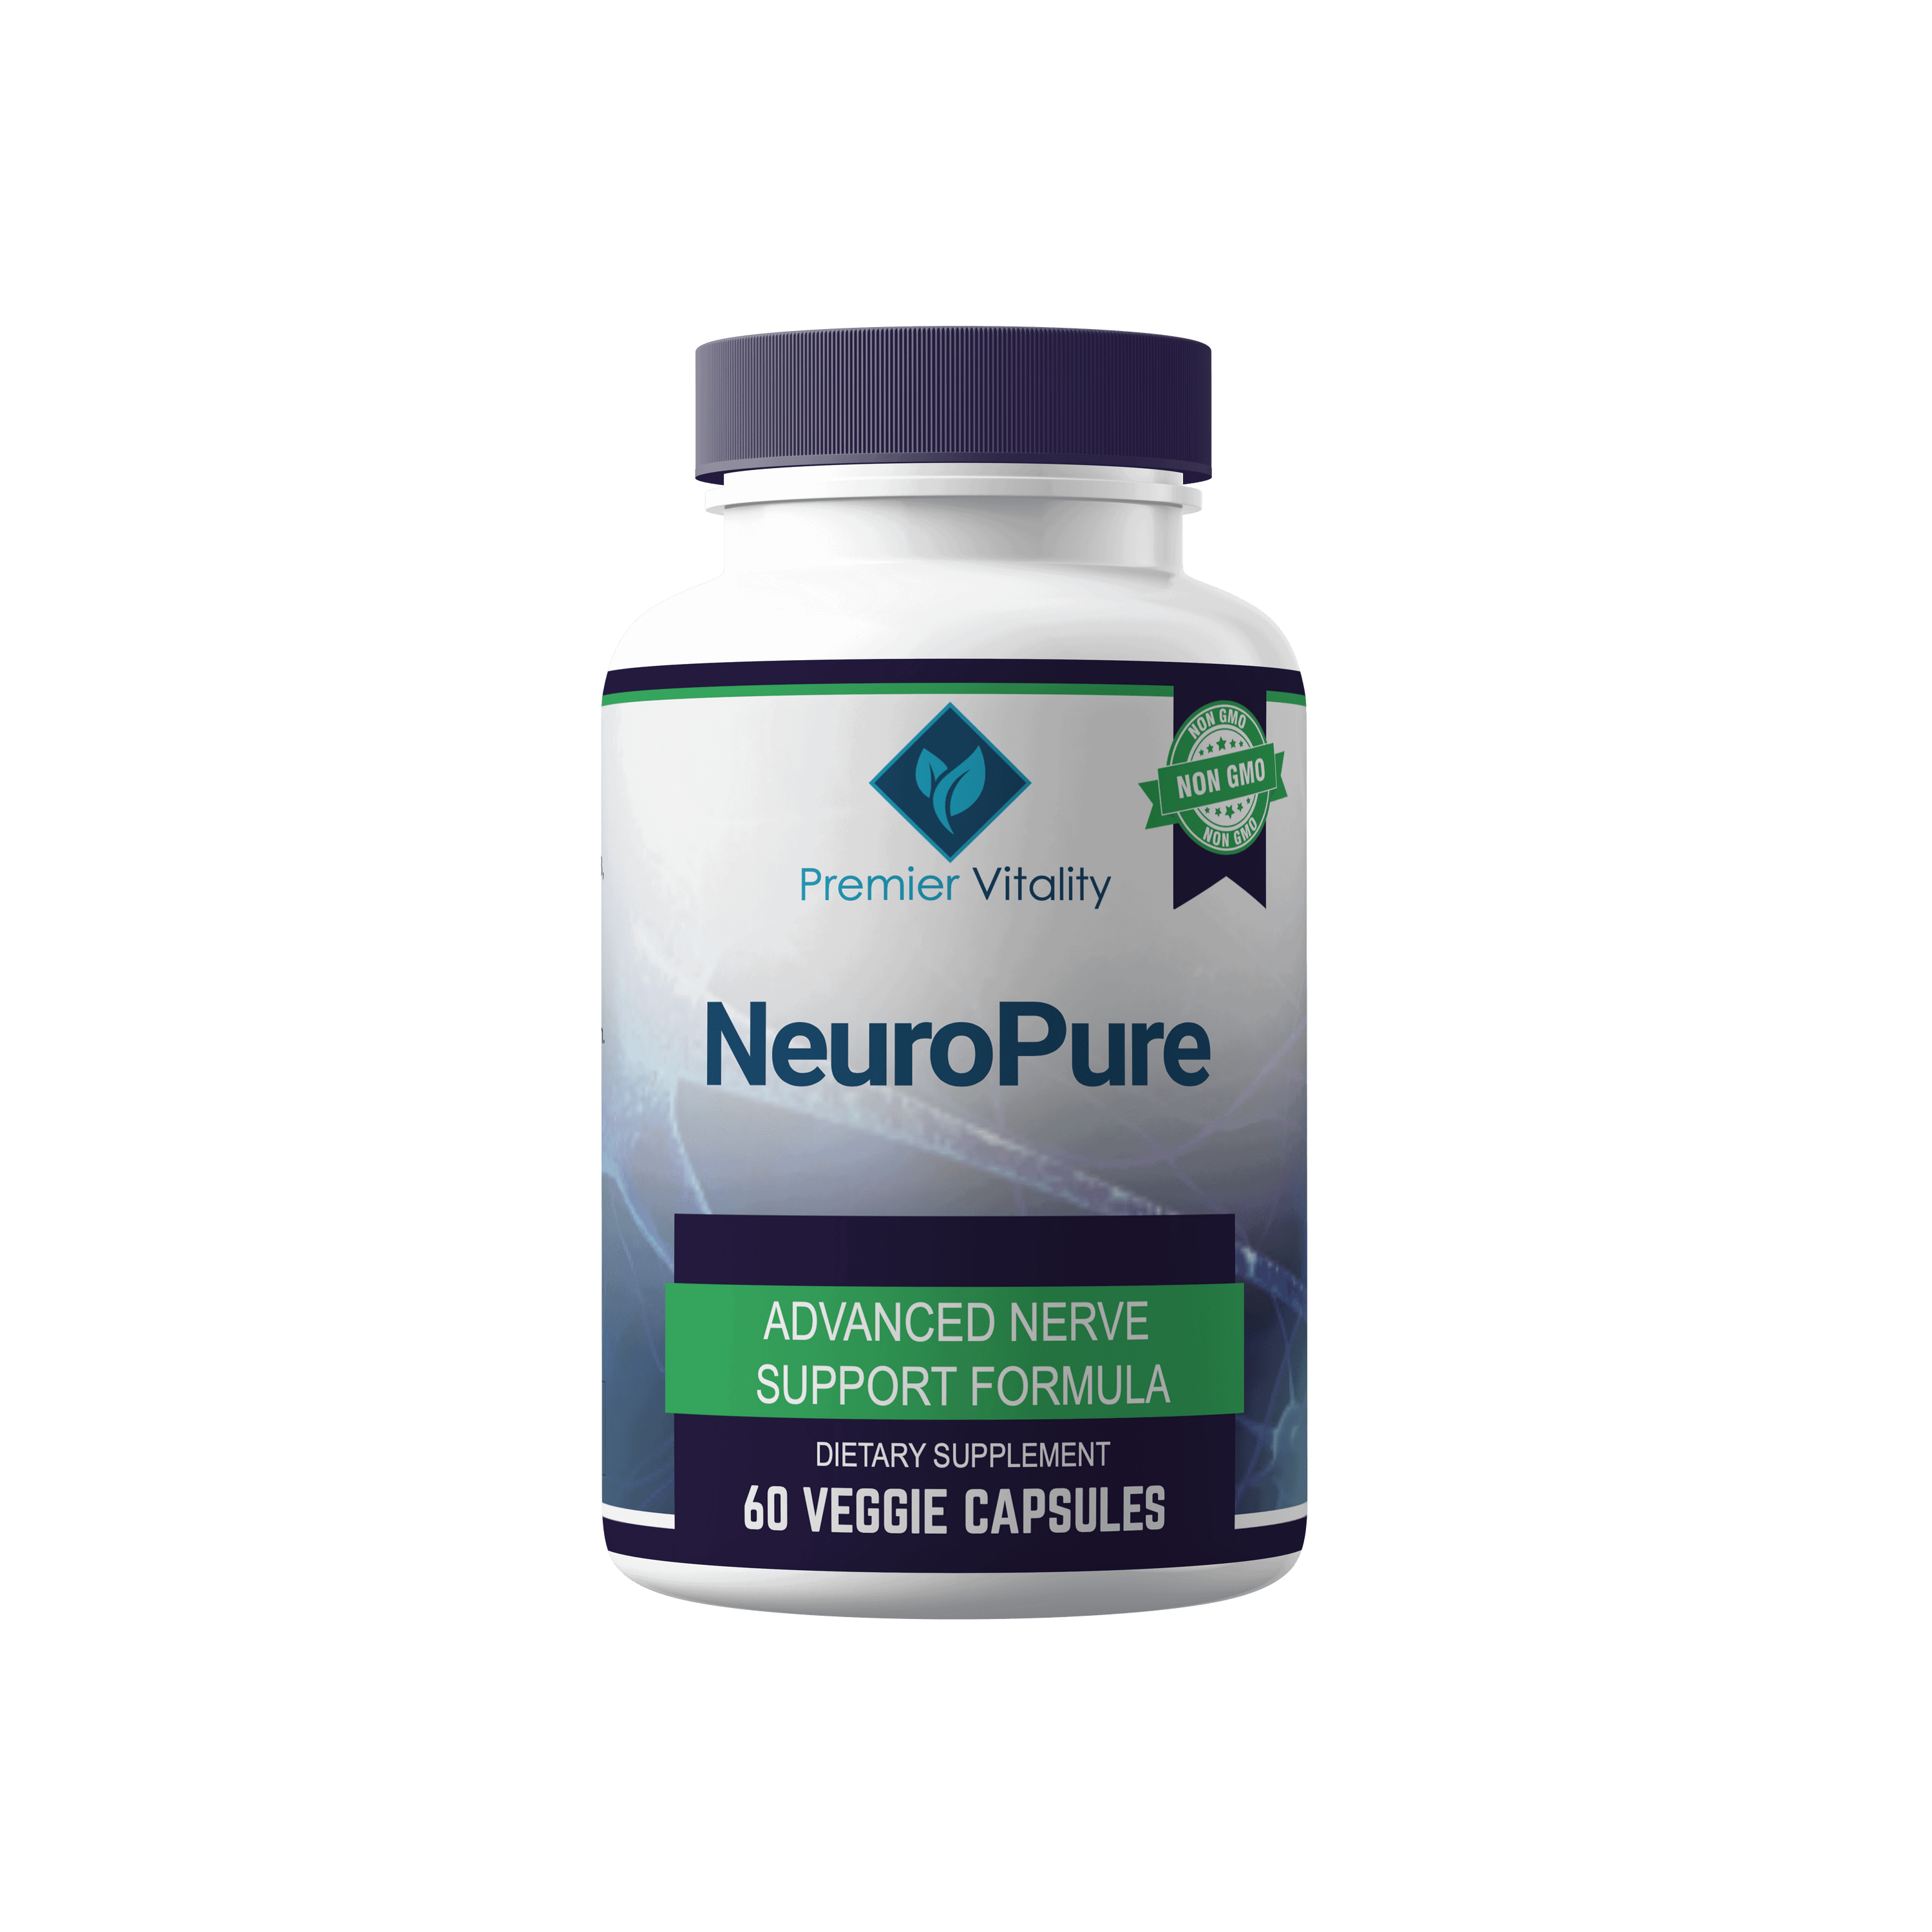 NeuroPure-1- Bottle-Nerve pain relief-key highlights